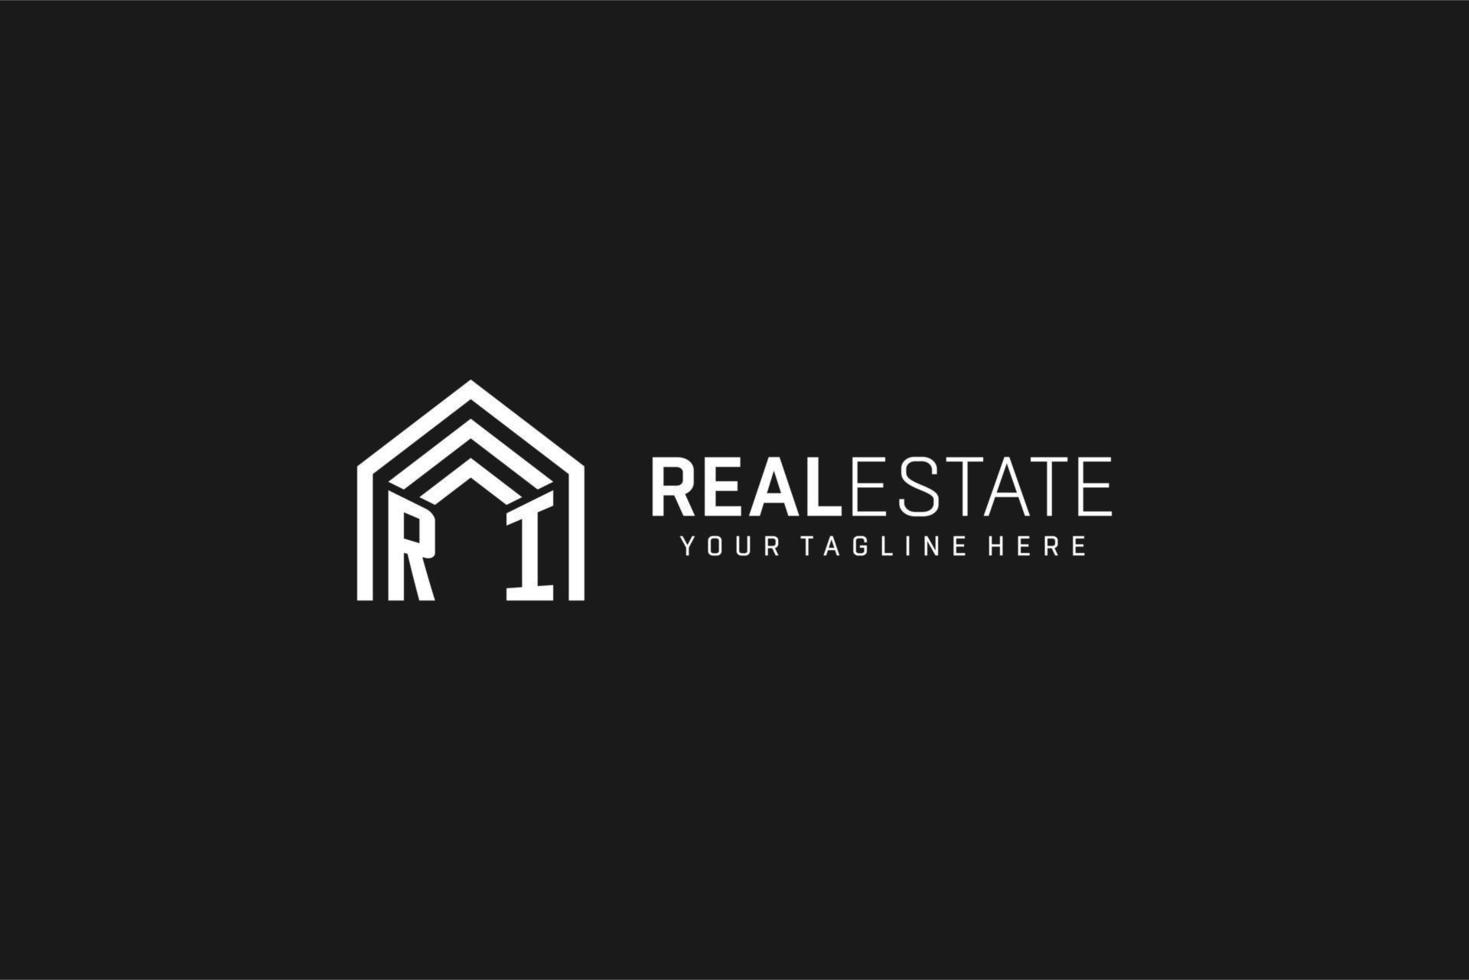 Letter RI house roof shape logo, creative real estate monogram logo style vector